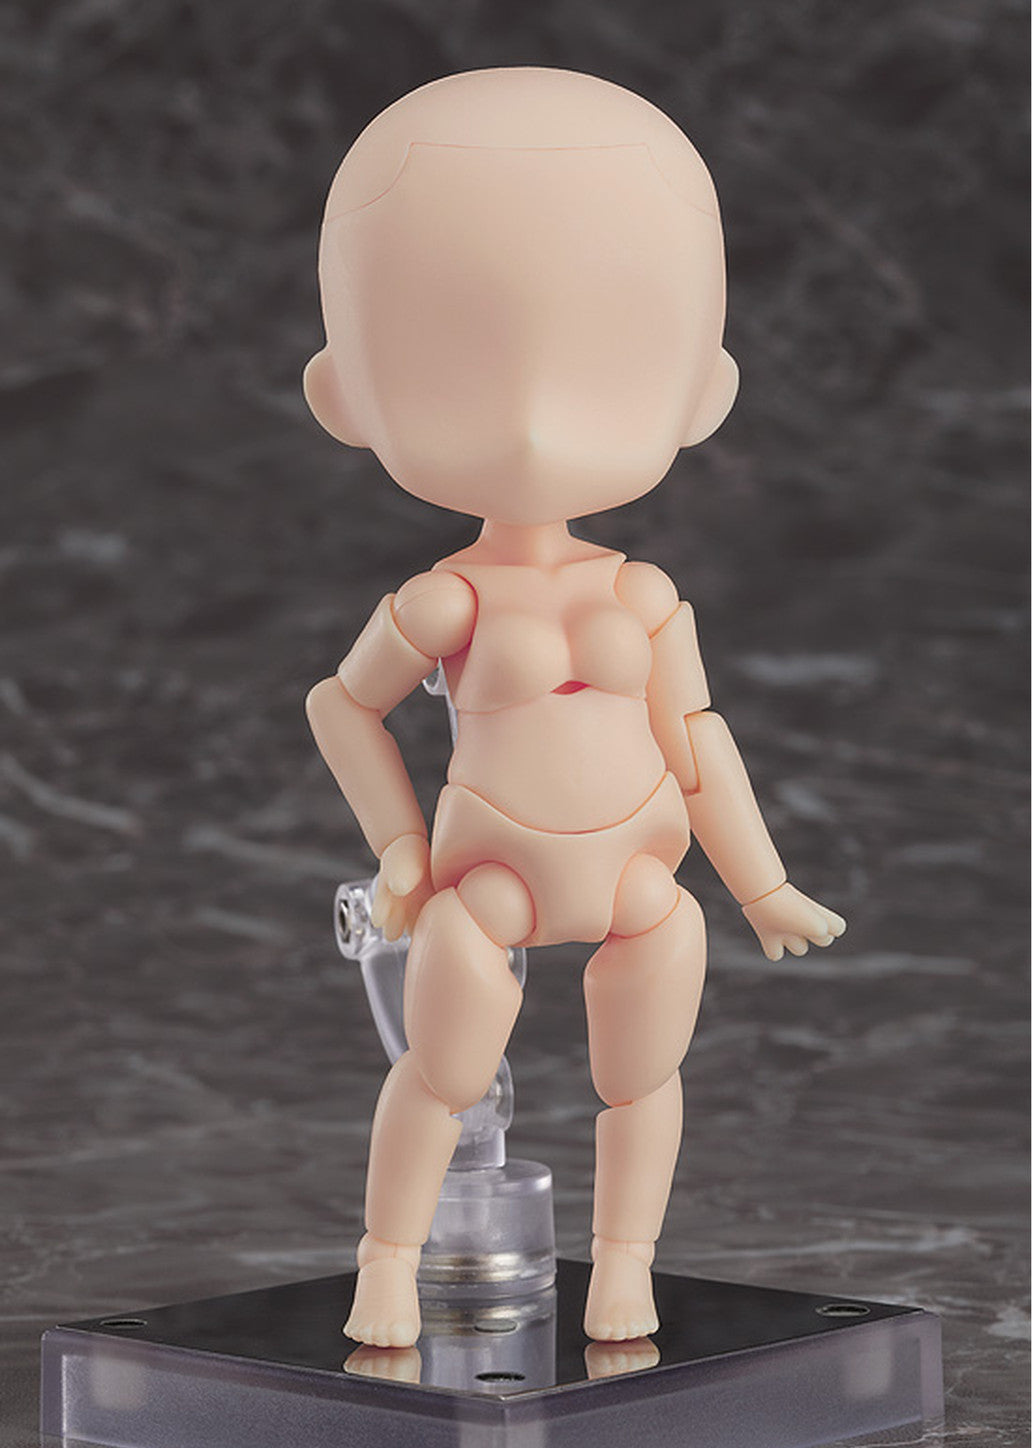 Nendoroid Doll Archetype 1.1: Woman (Cream)